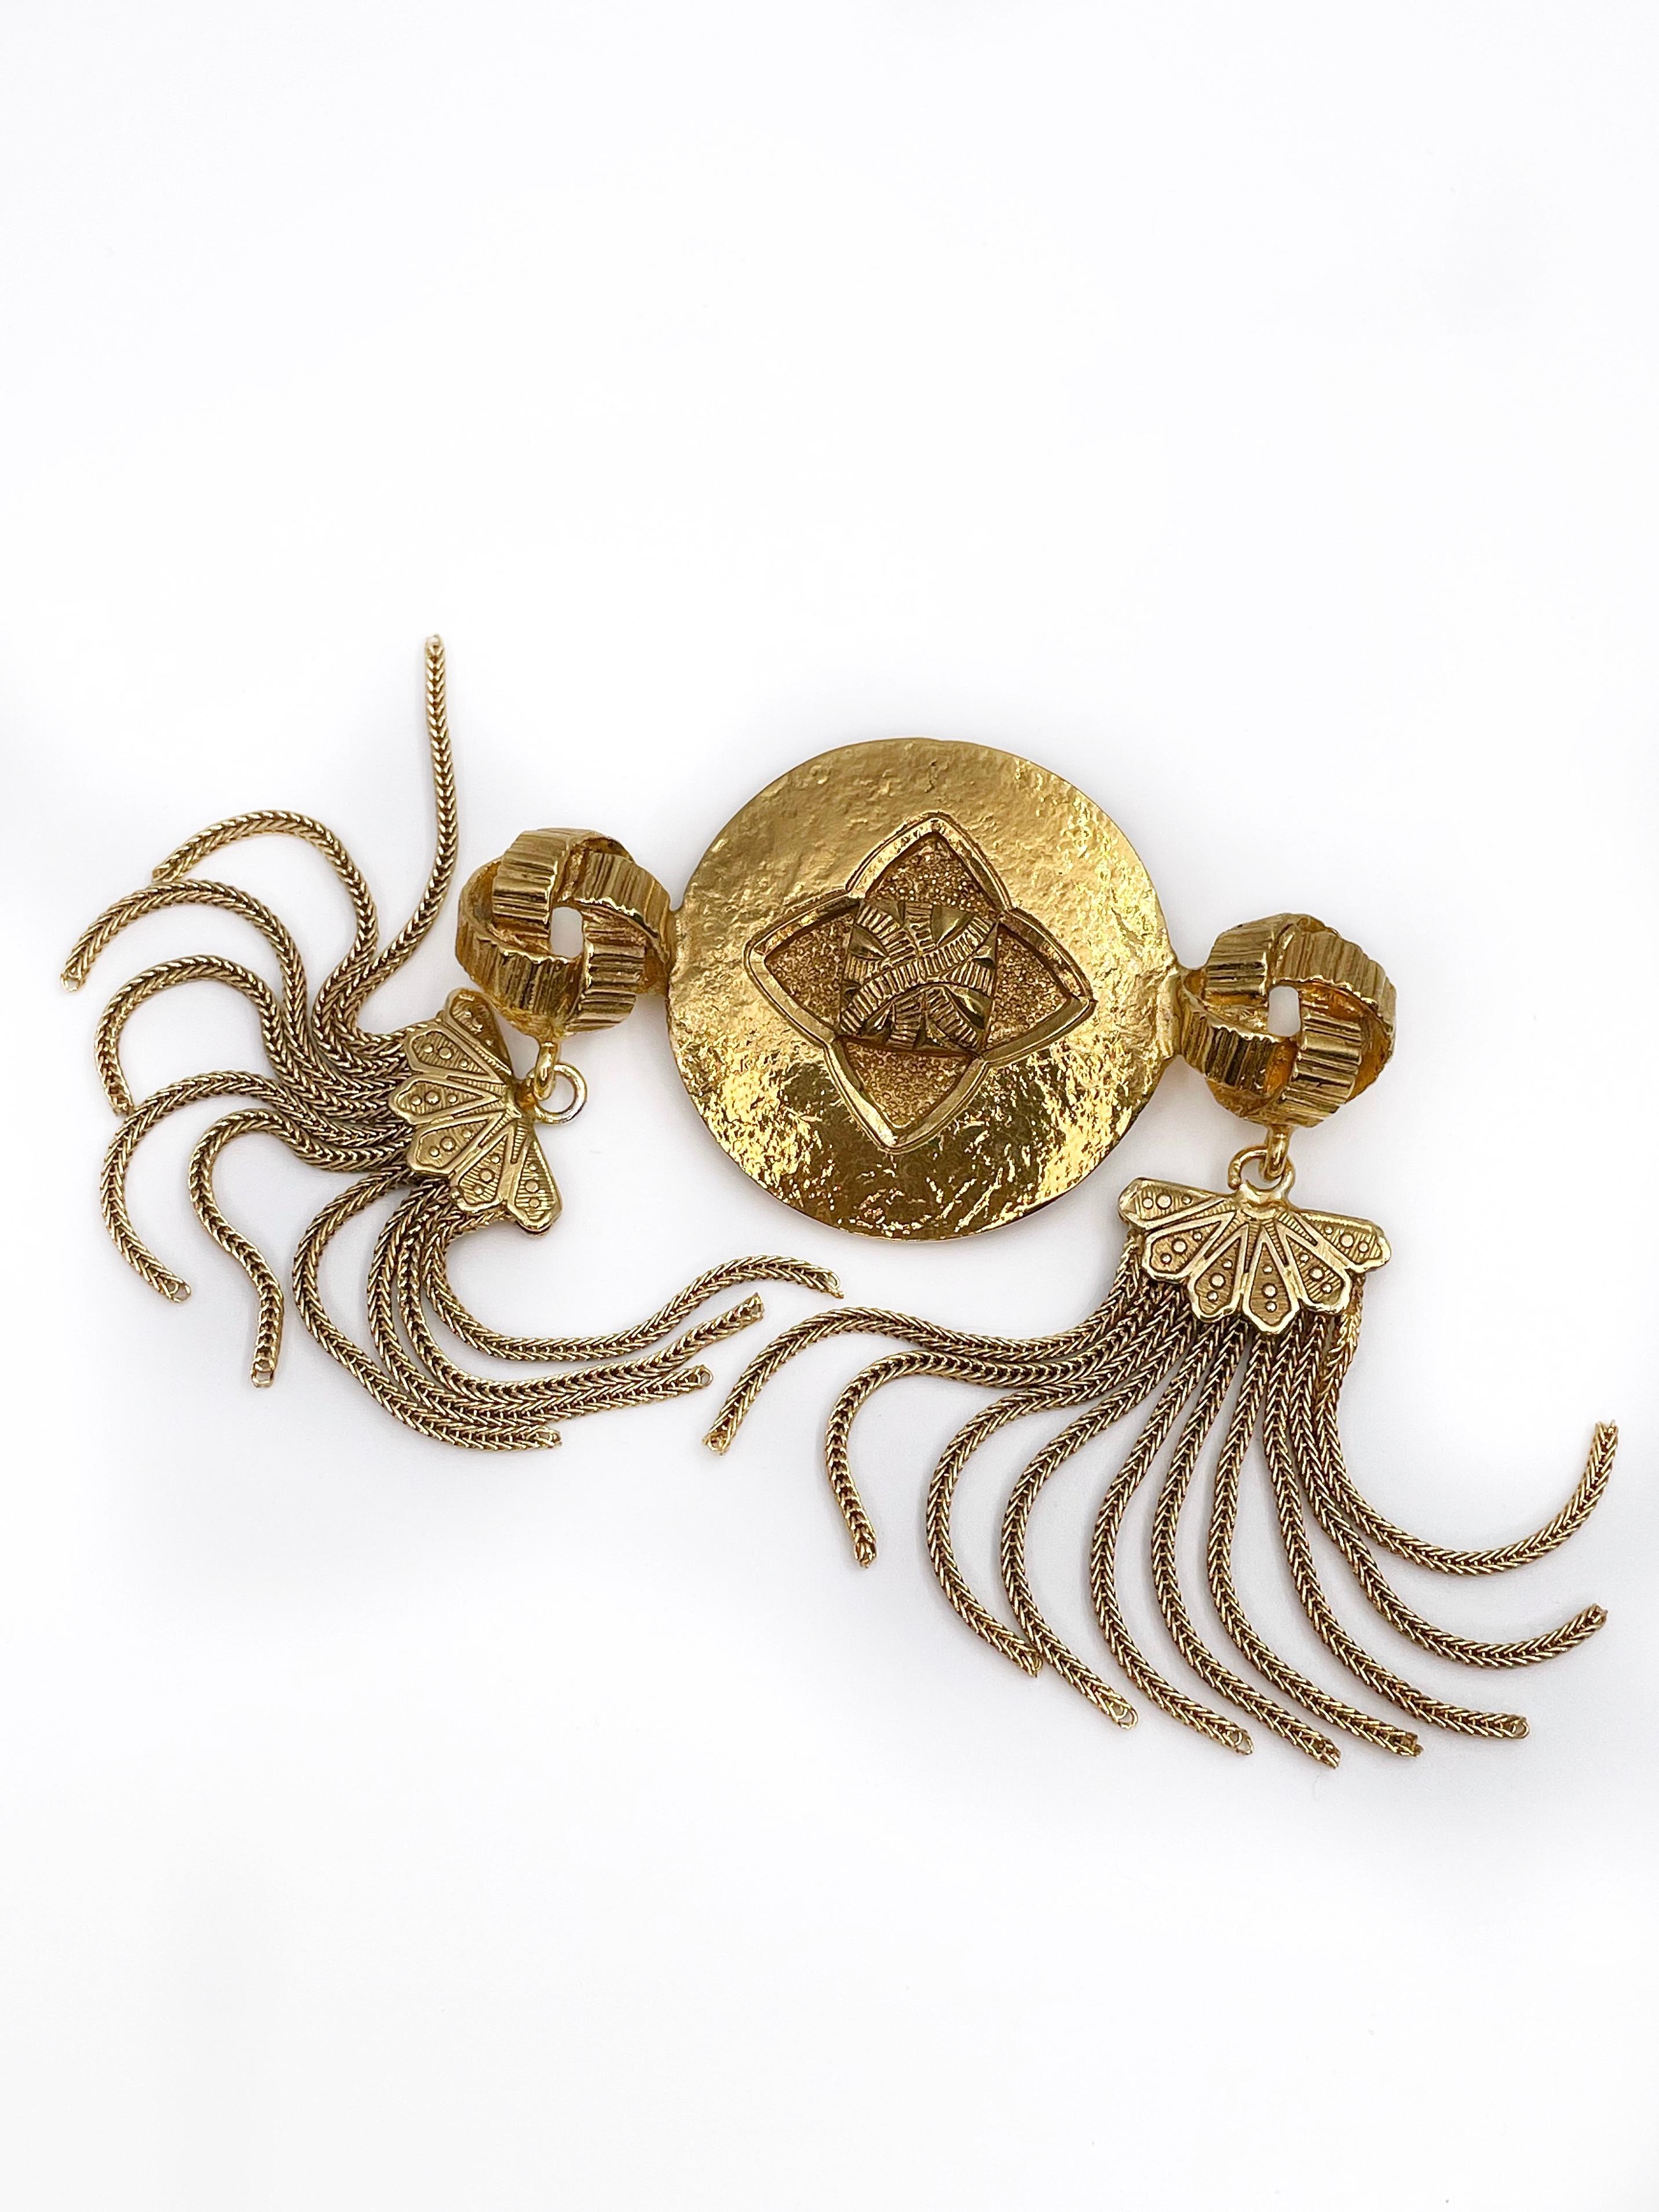 Contemporary Vintage Yves Saint Laurent Gold Tone Tassel Brooch Pendant